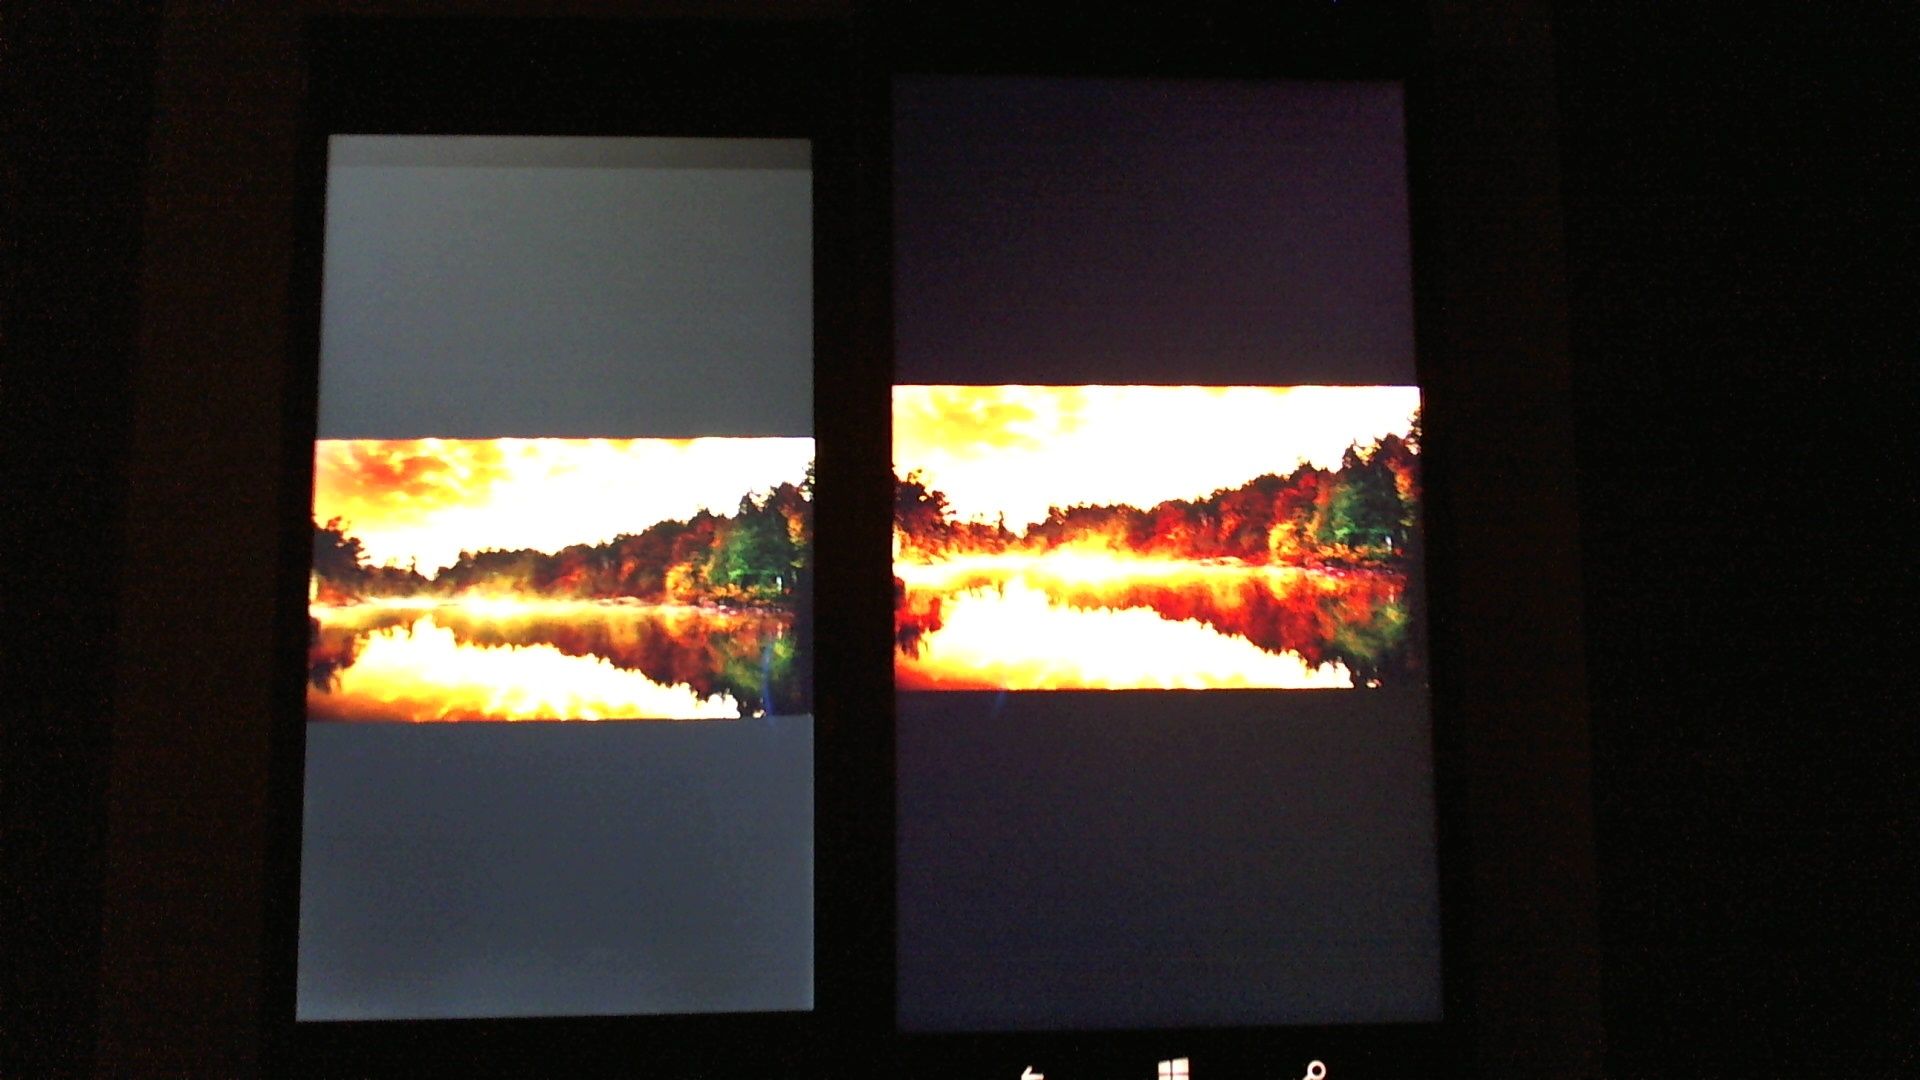 Сравнение экранов Turbo X Dream и Nokia Lumia 1520